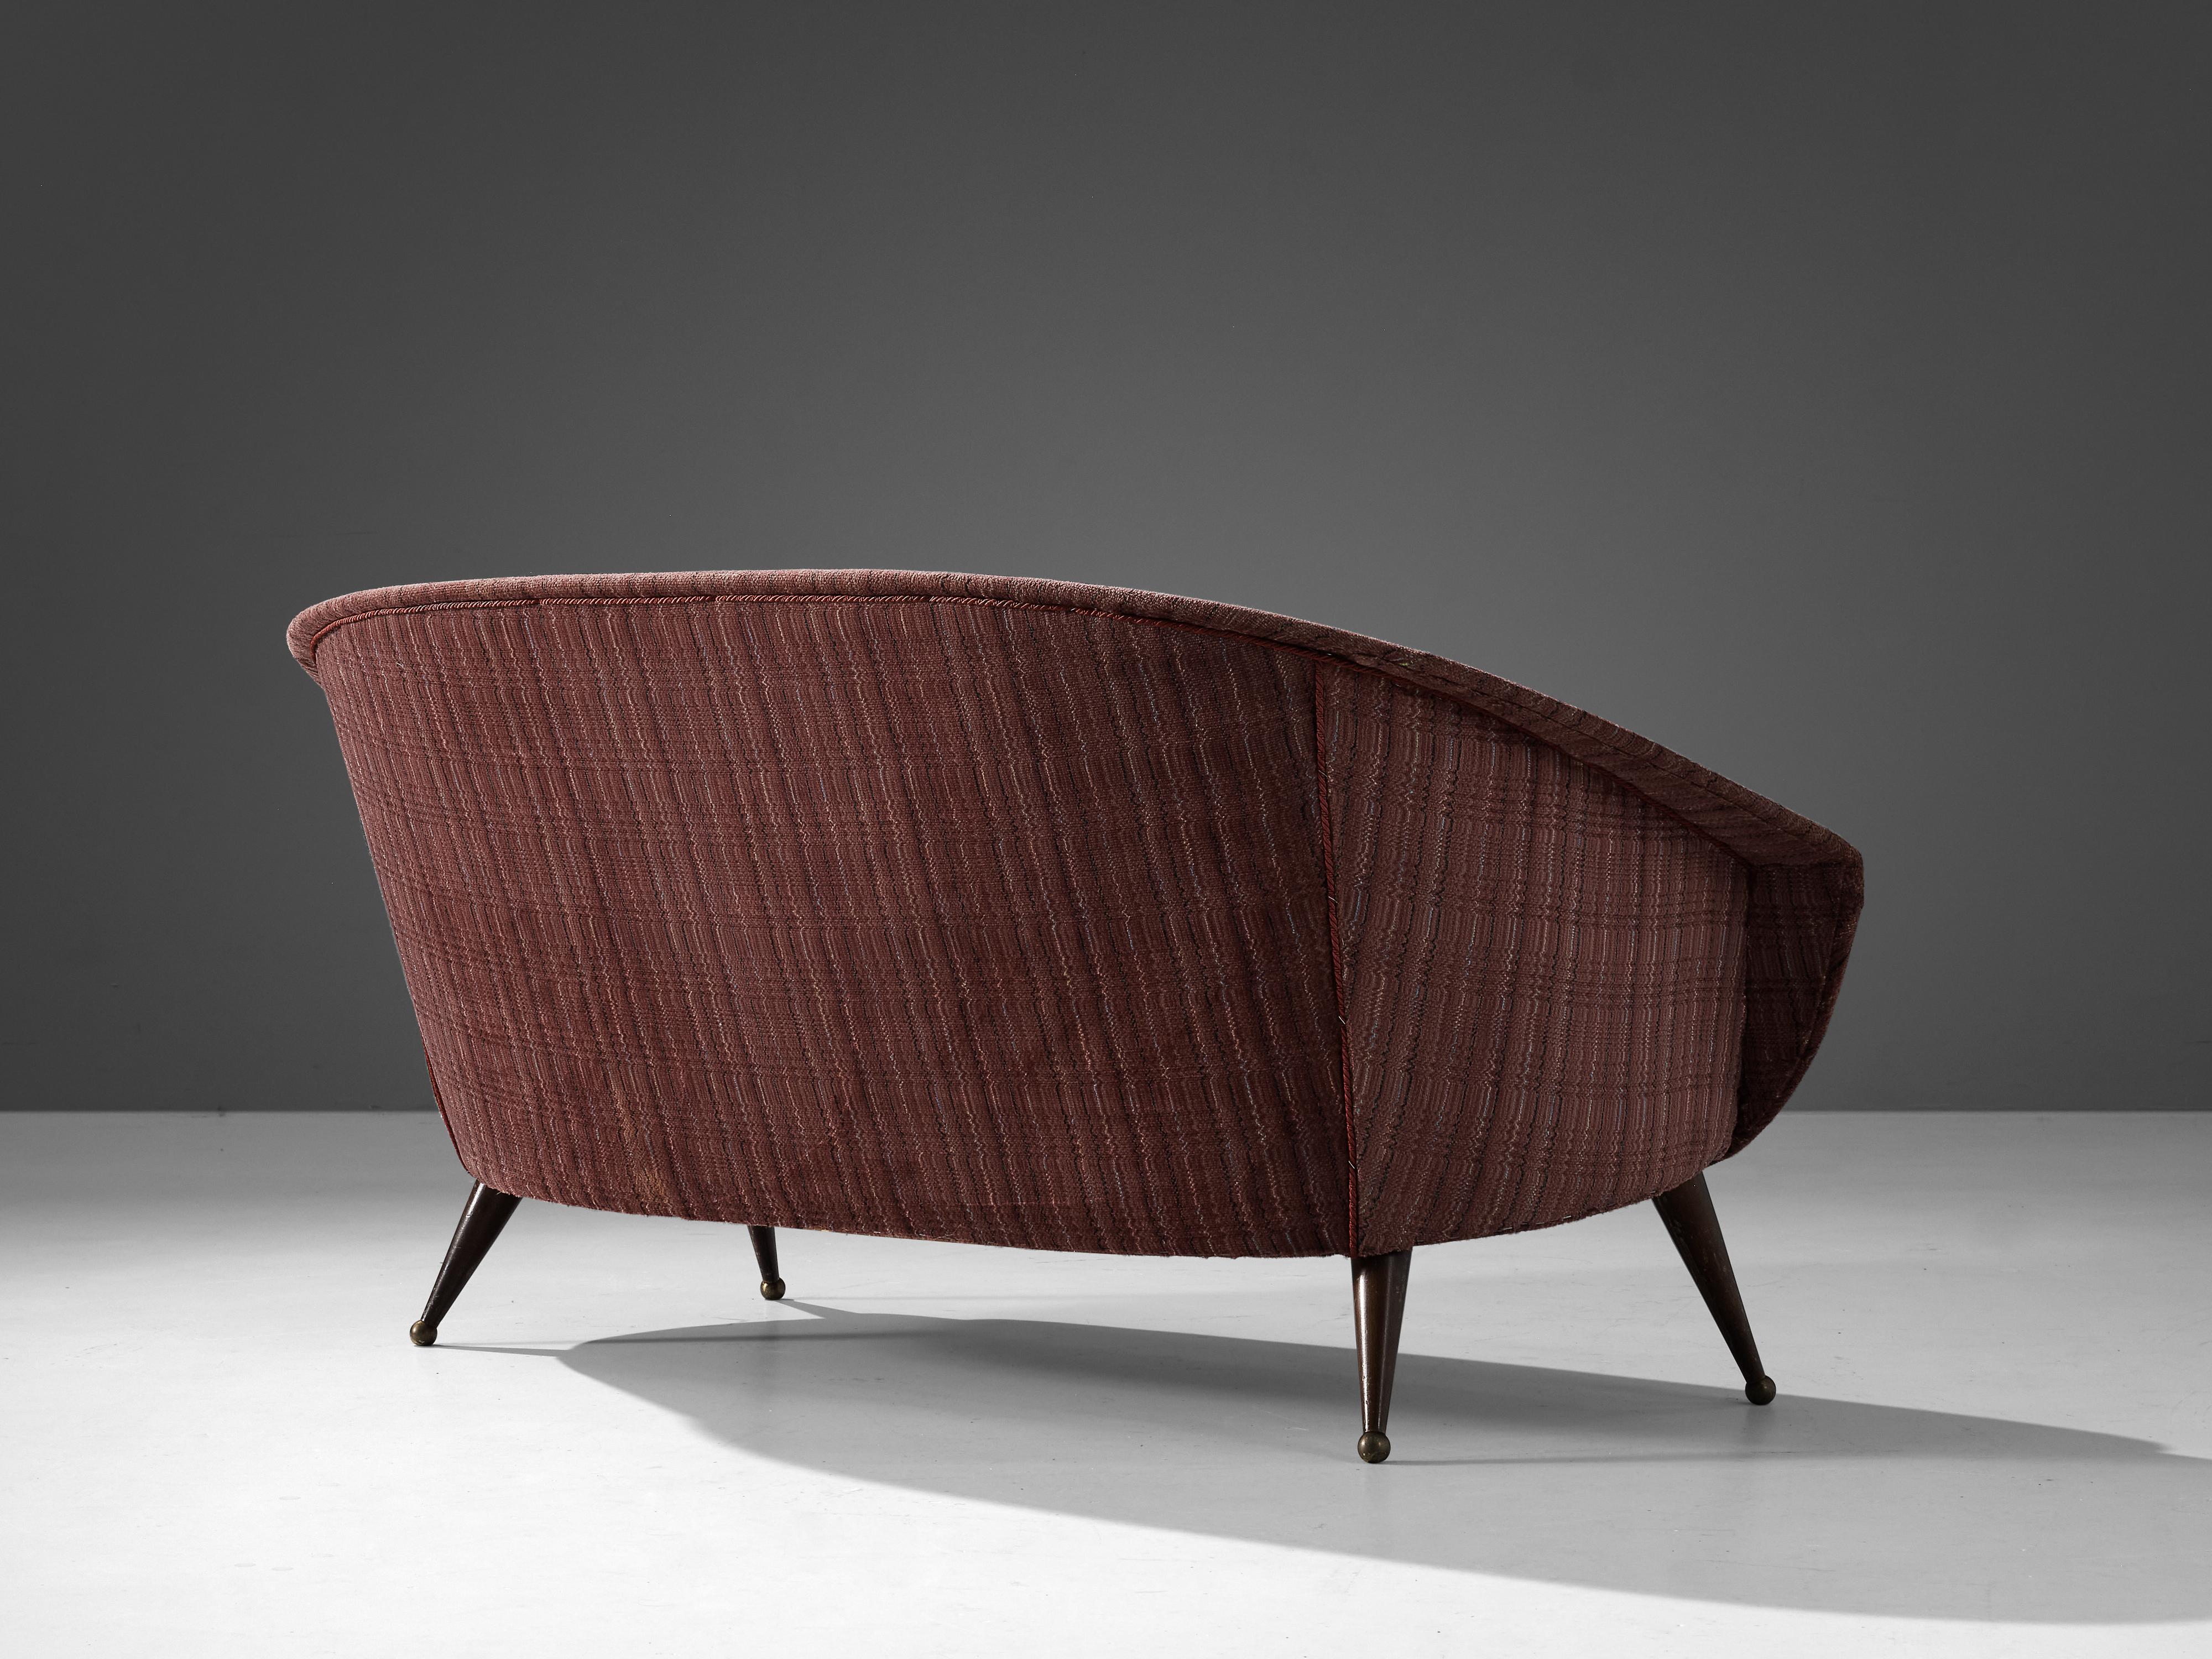 Brass Folke Jansson 'Tellus' Sofa in Dusty Rose Upholstery For Sale